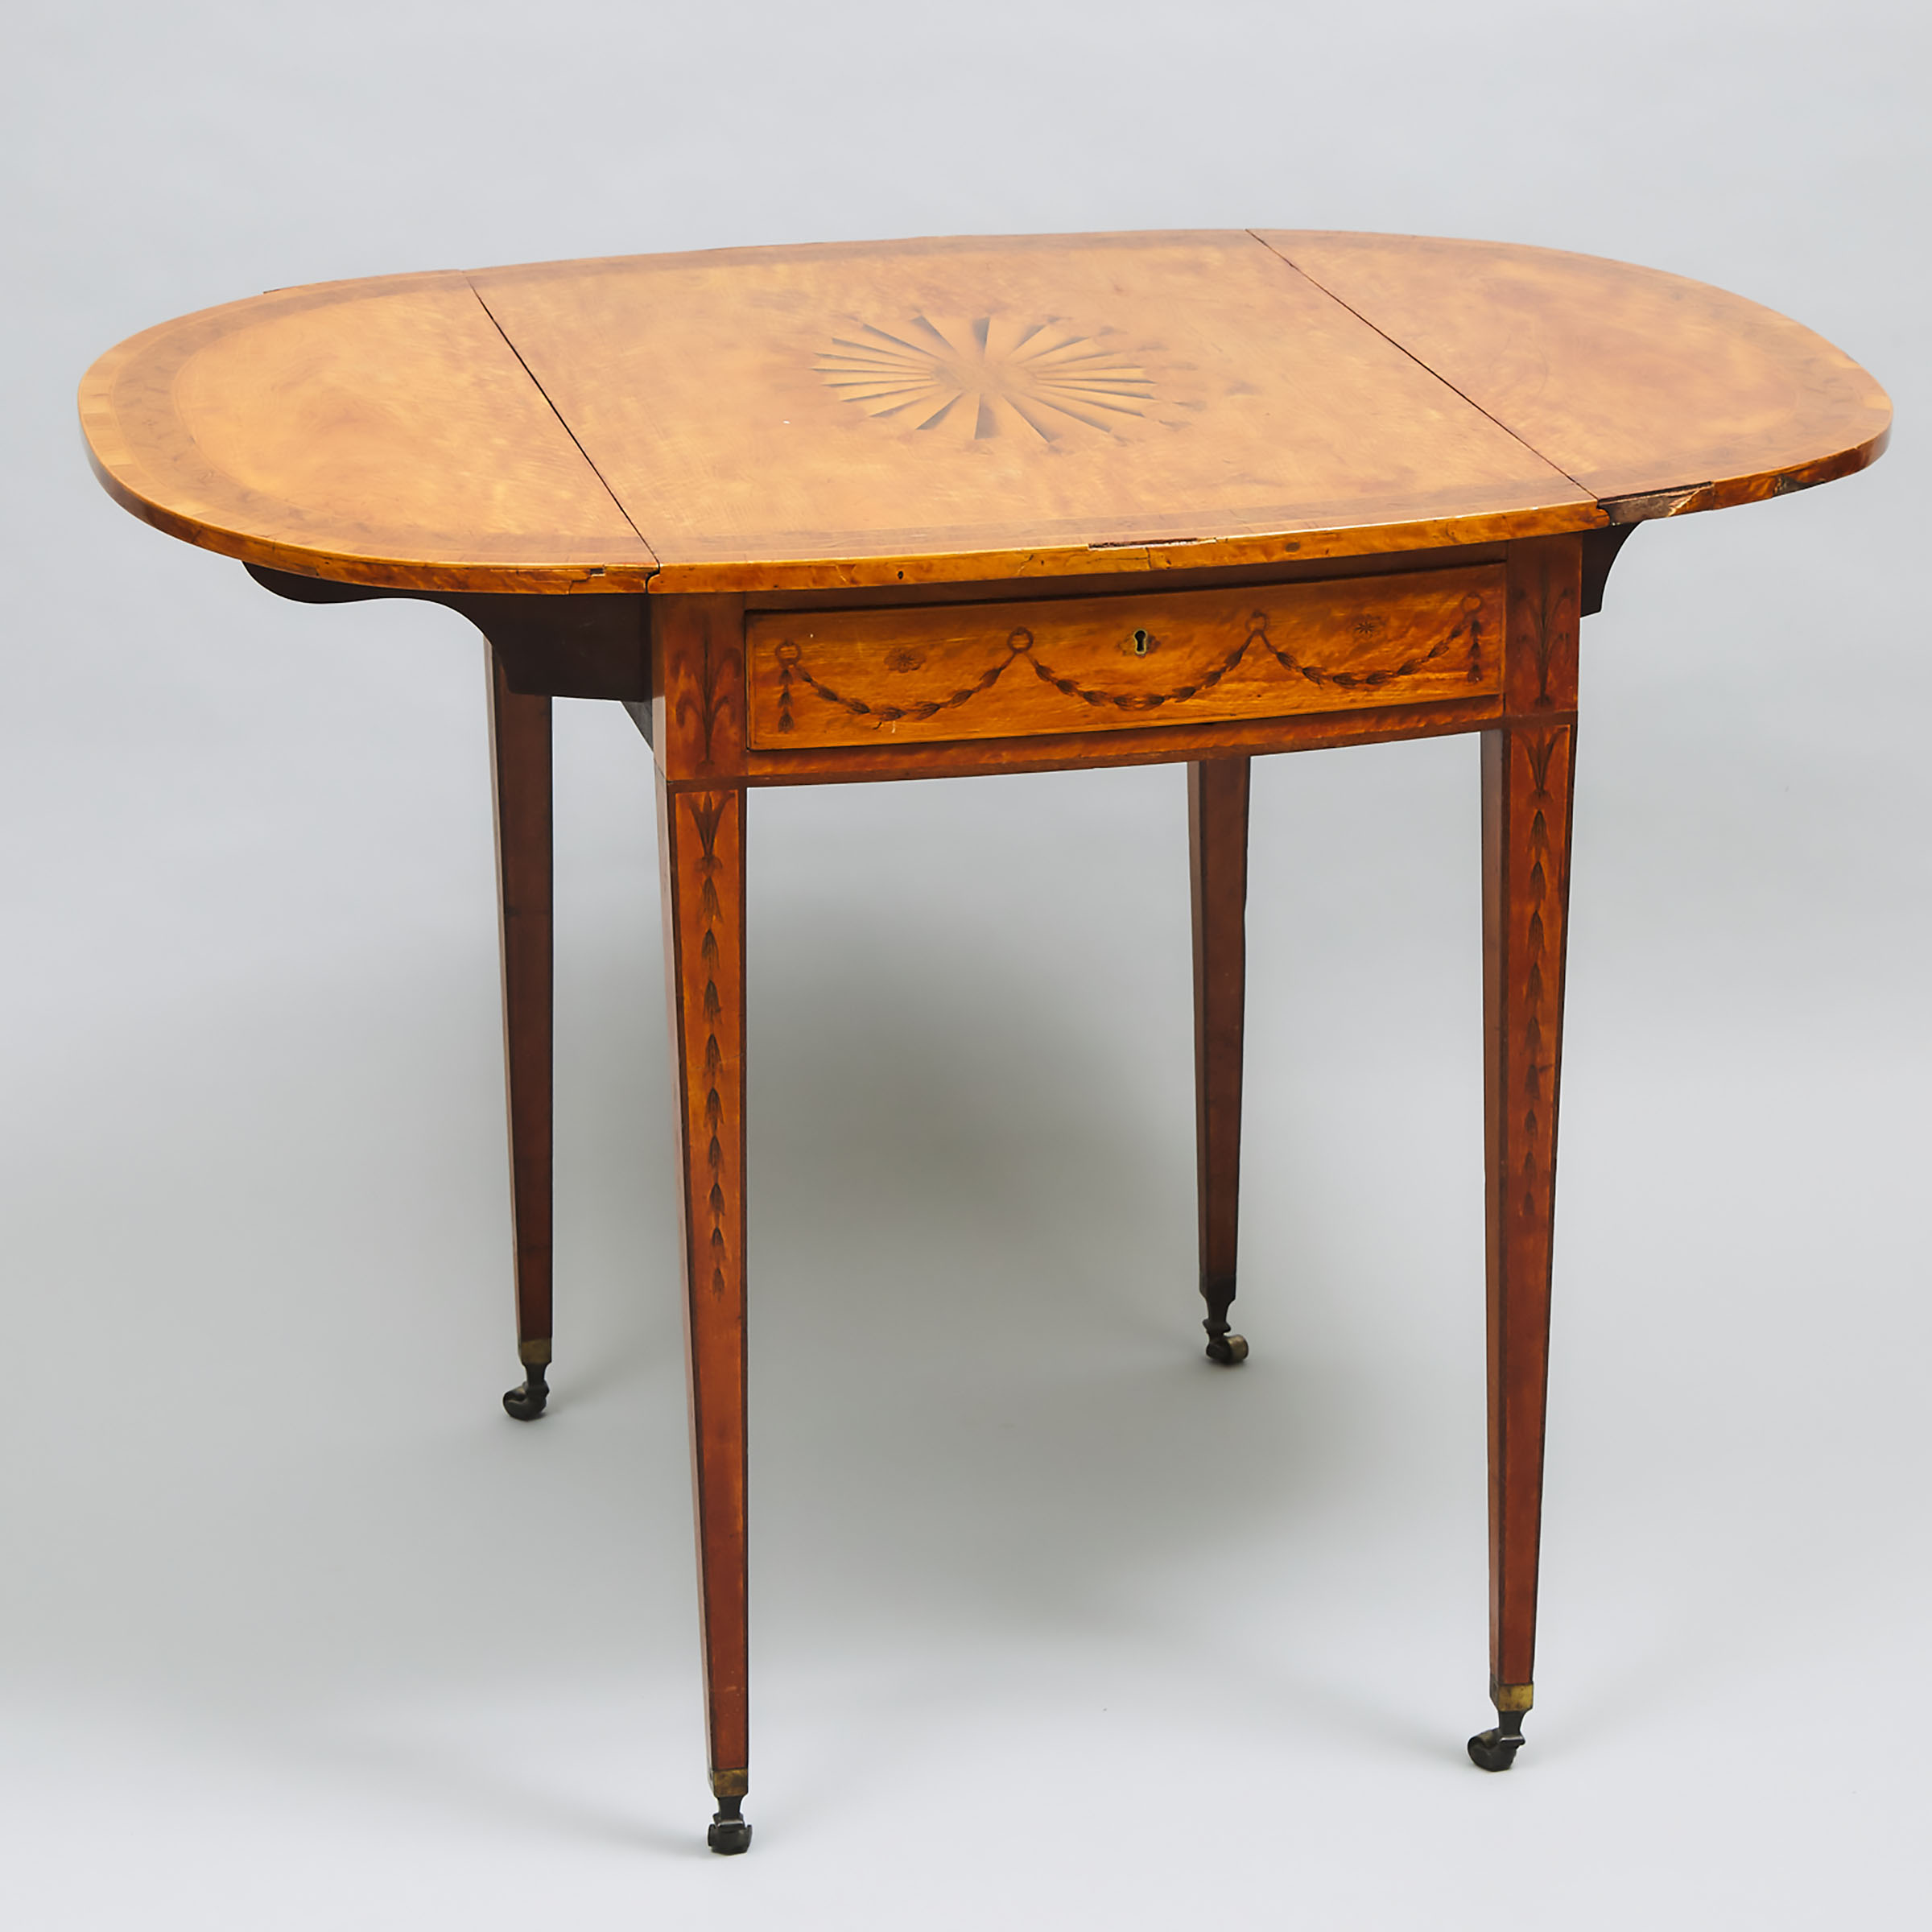 George III Adam Style Crossbanded and inlaid Satinwood Pembroke Table, c.1785